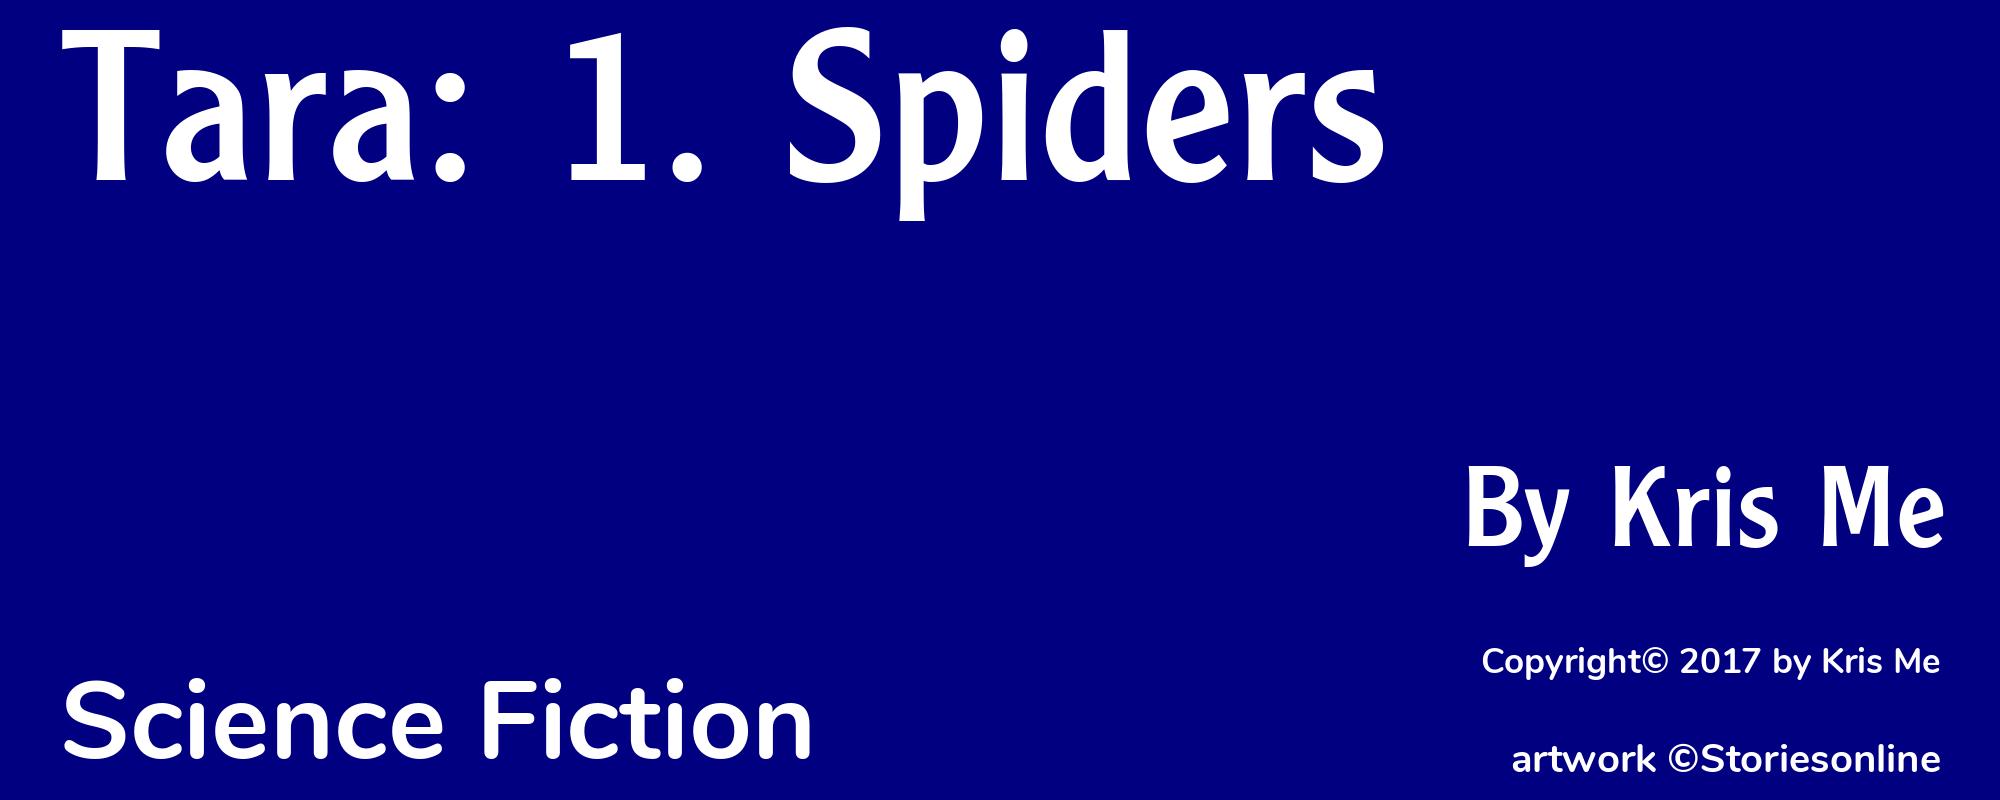 Tara: 1. Spiders - Cover